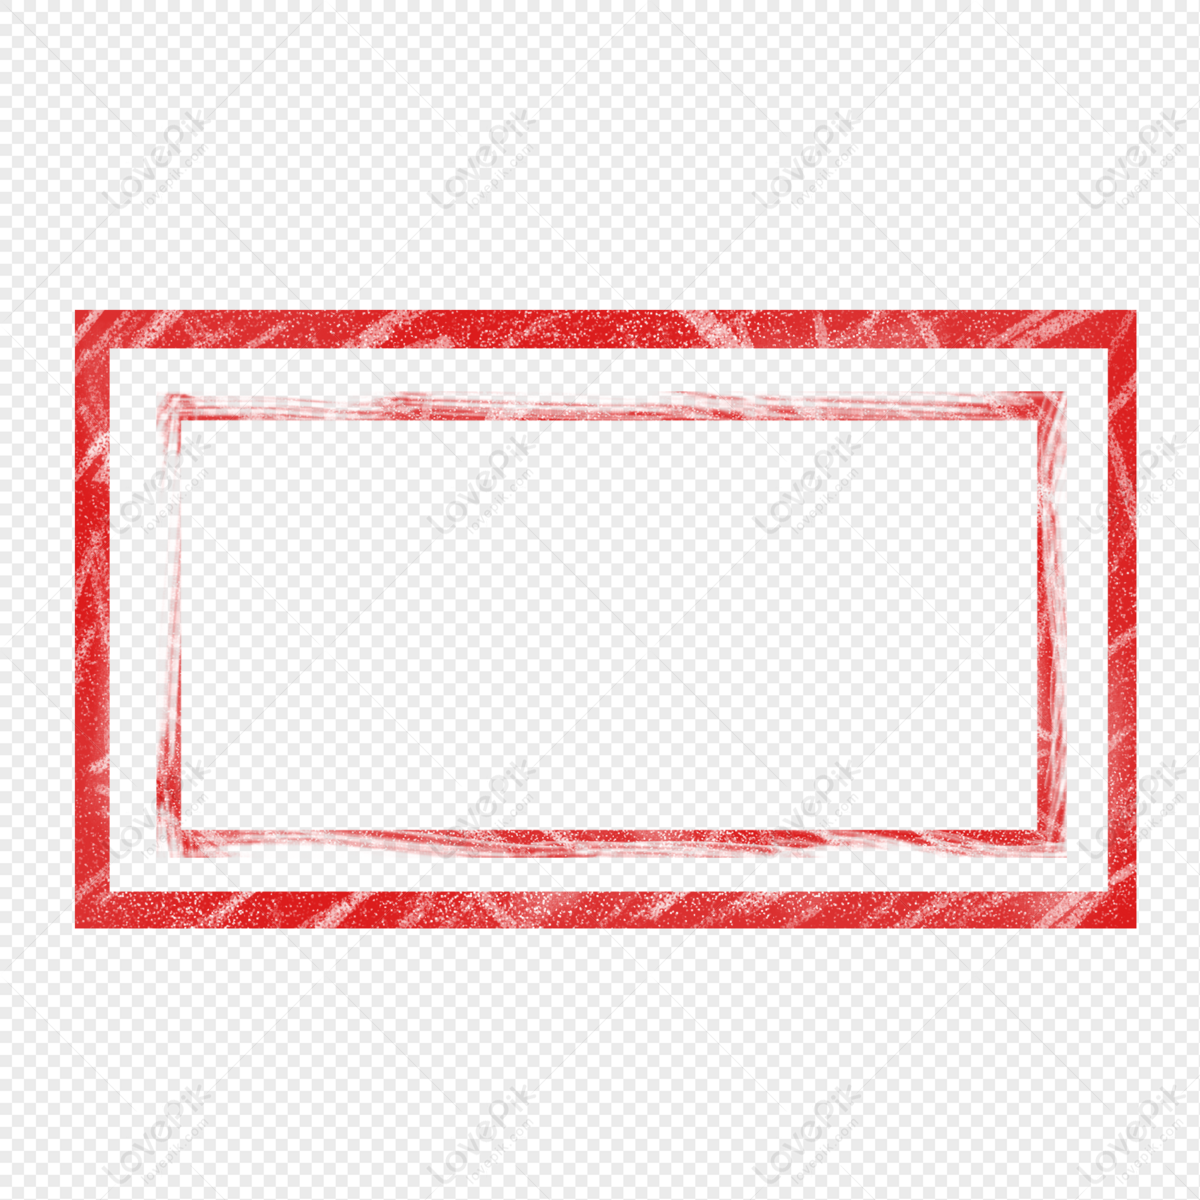 Letter Stamp PNG Transparent Images Free Download, Vector Files